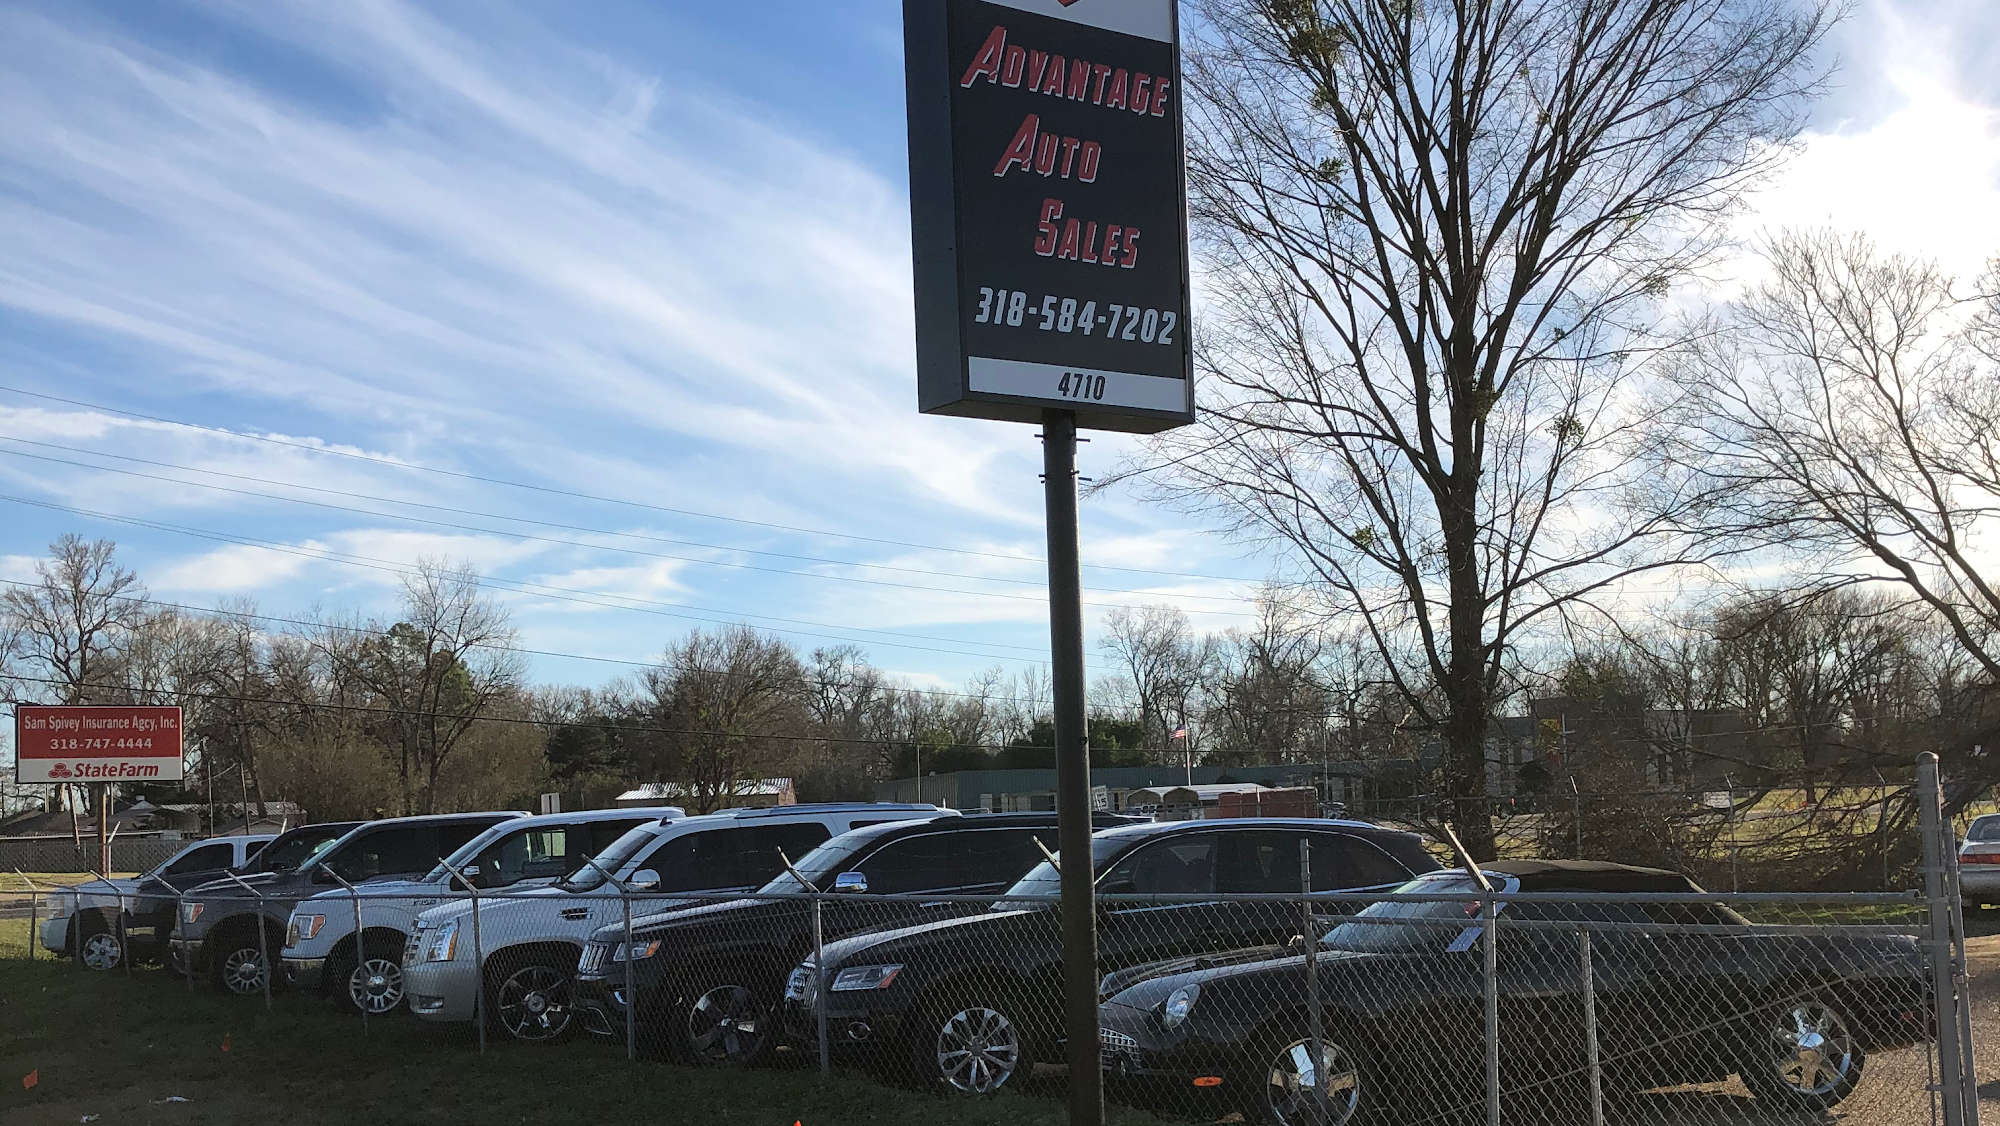 Advantage Auto Sales